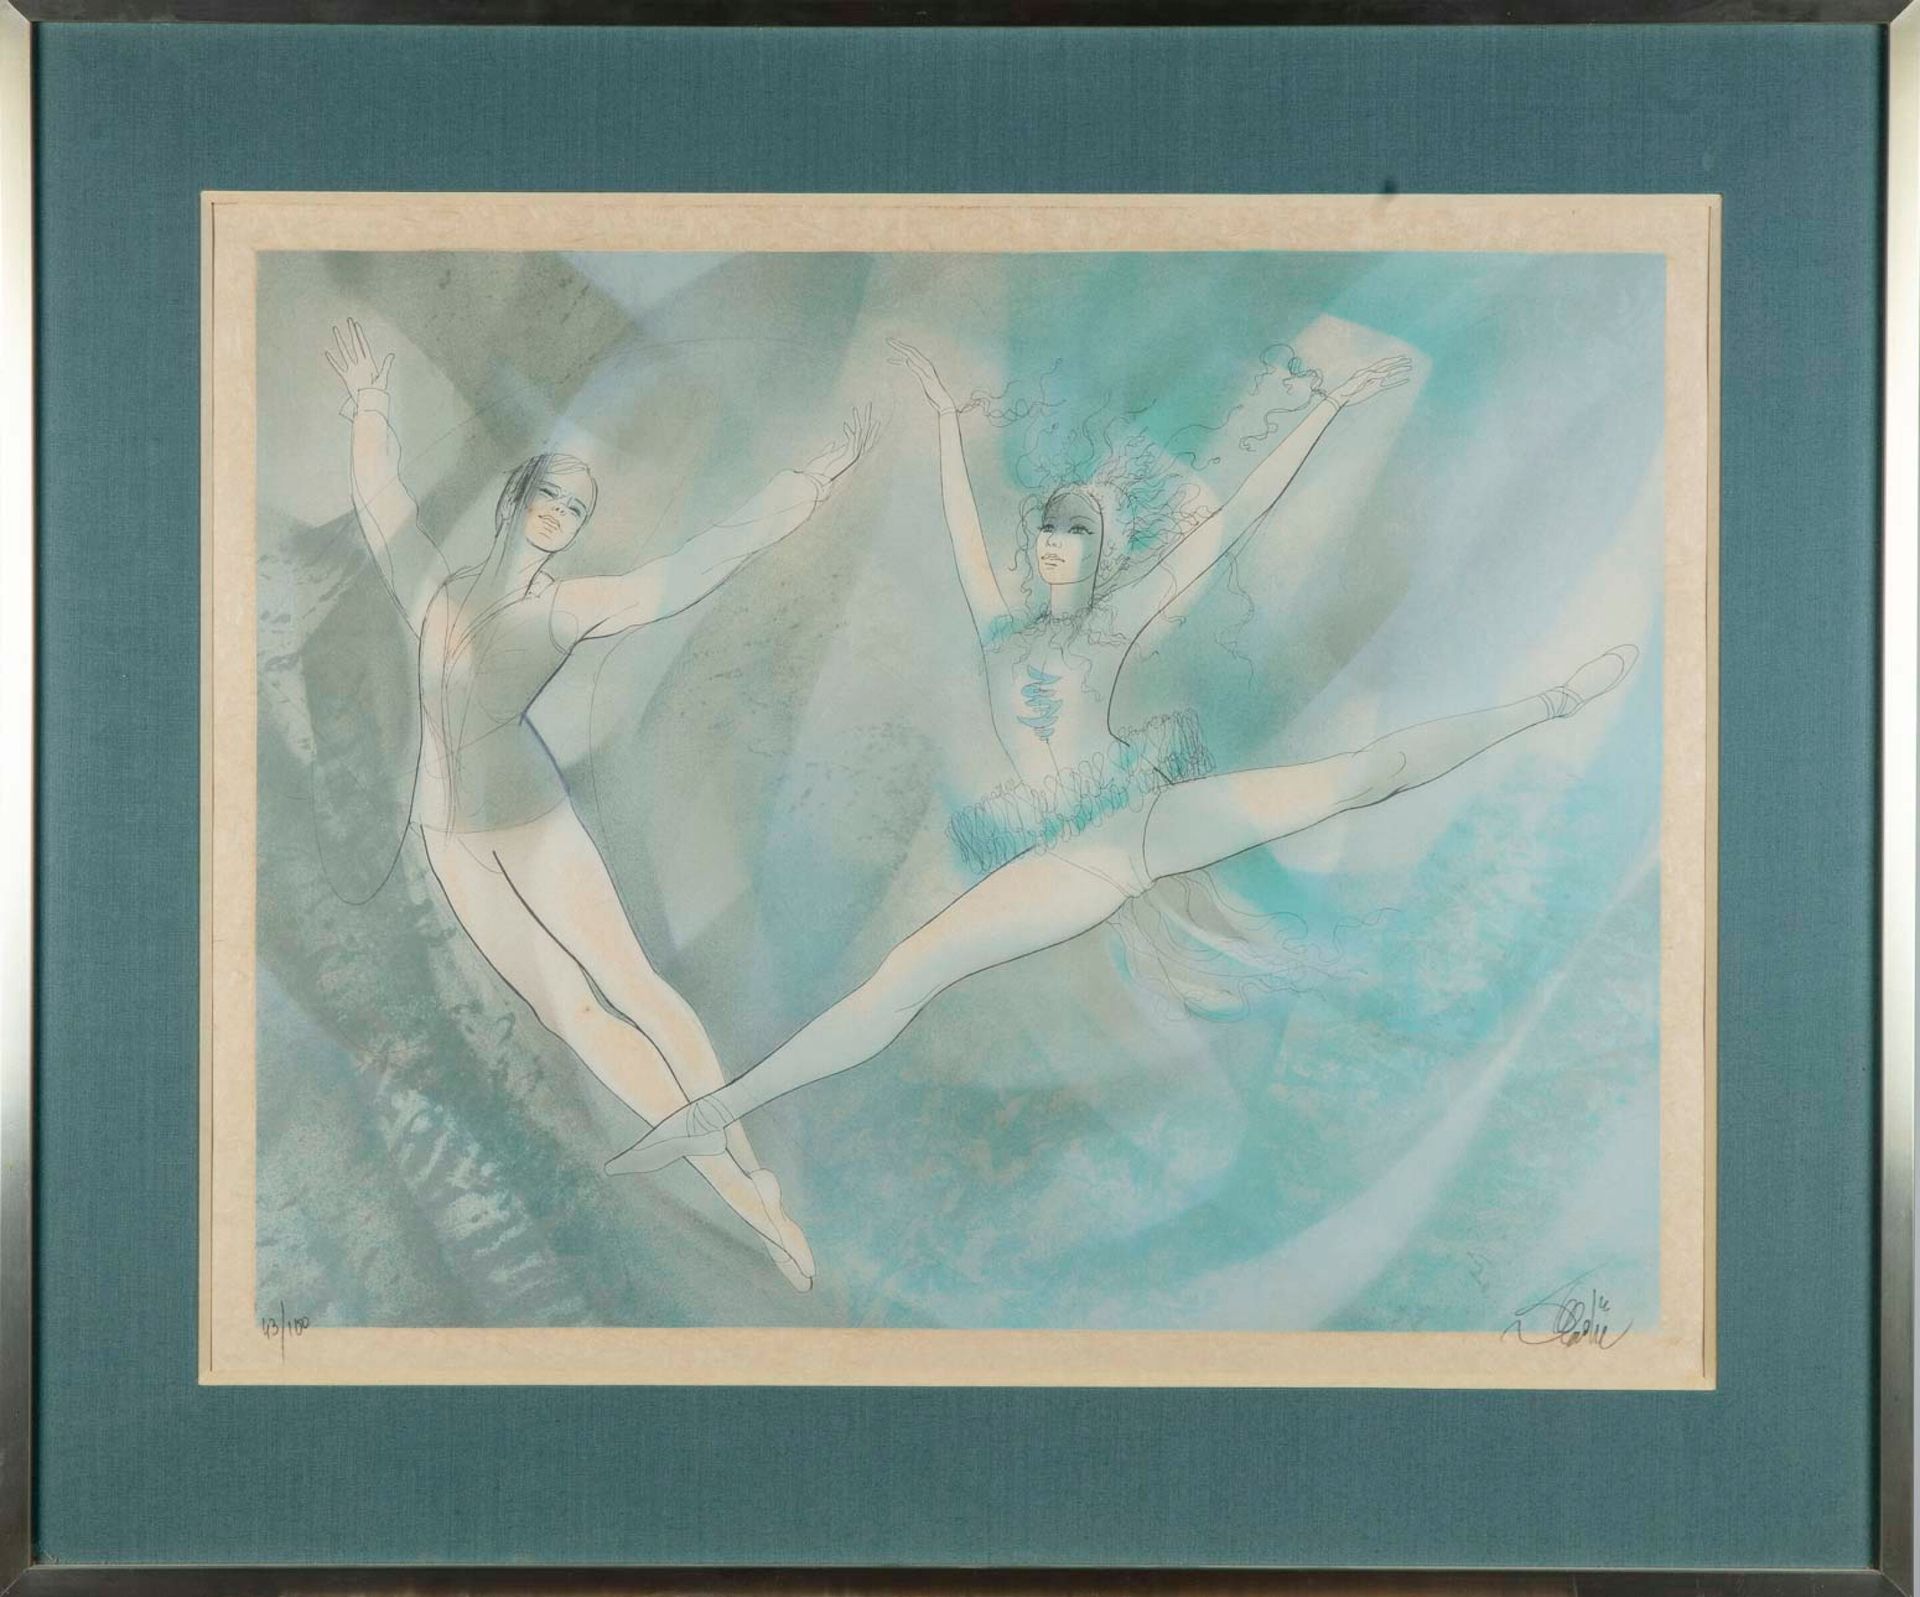 VALADIE 让-巴蒂斯特-瓦拉迪 (1933年)

舞蹈家们

日本纸上的石版画

右下方有签名，编号为43/100

54 x 68 厘米